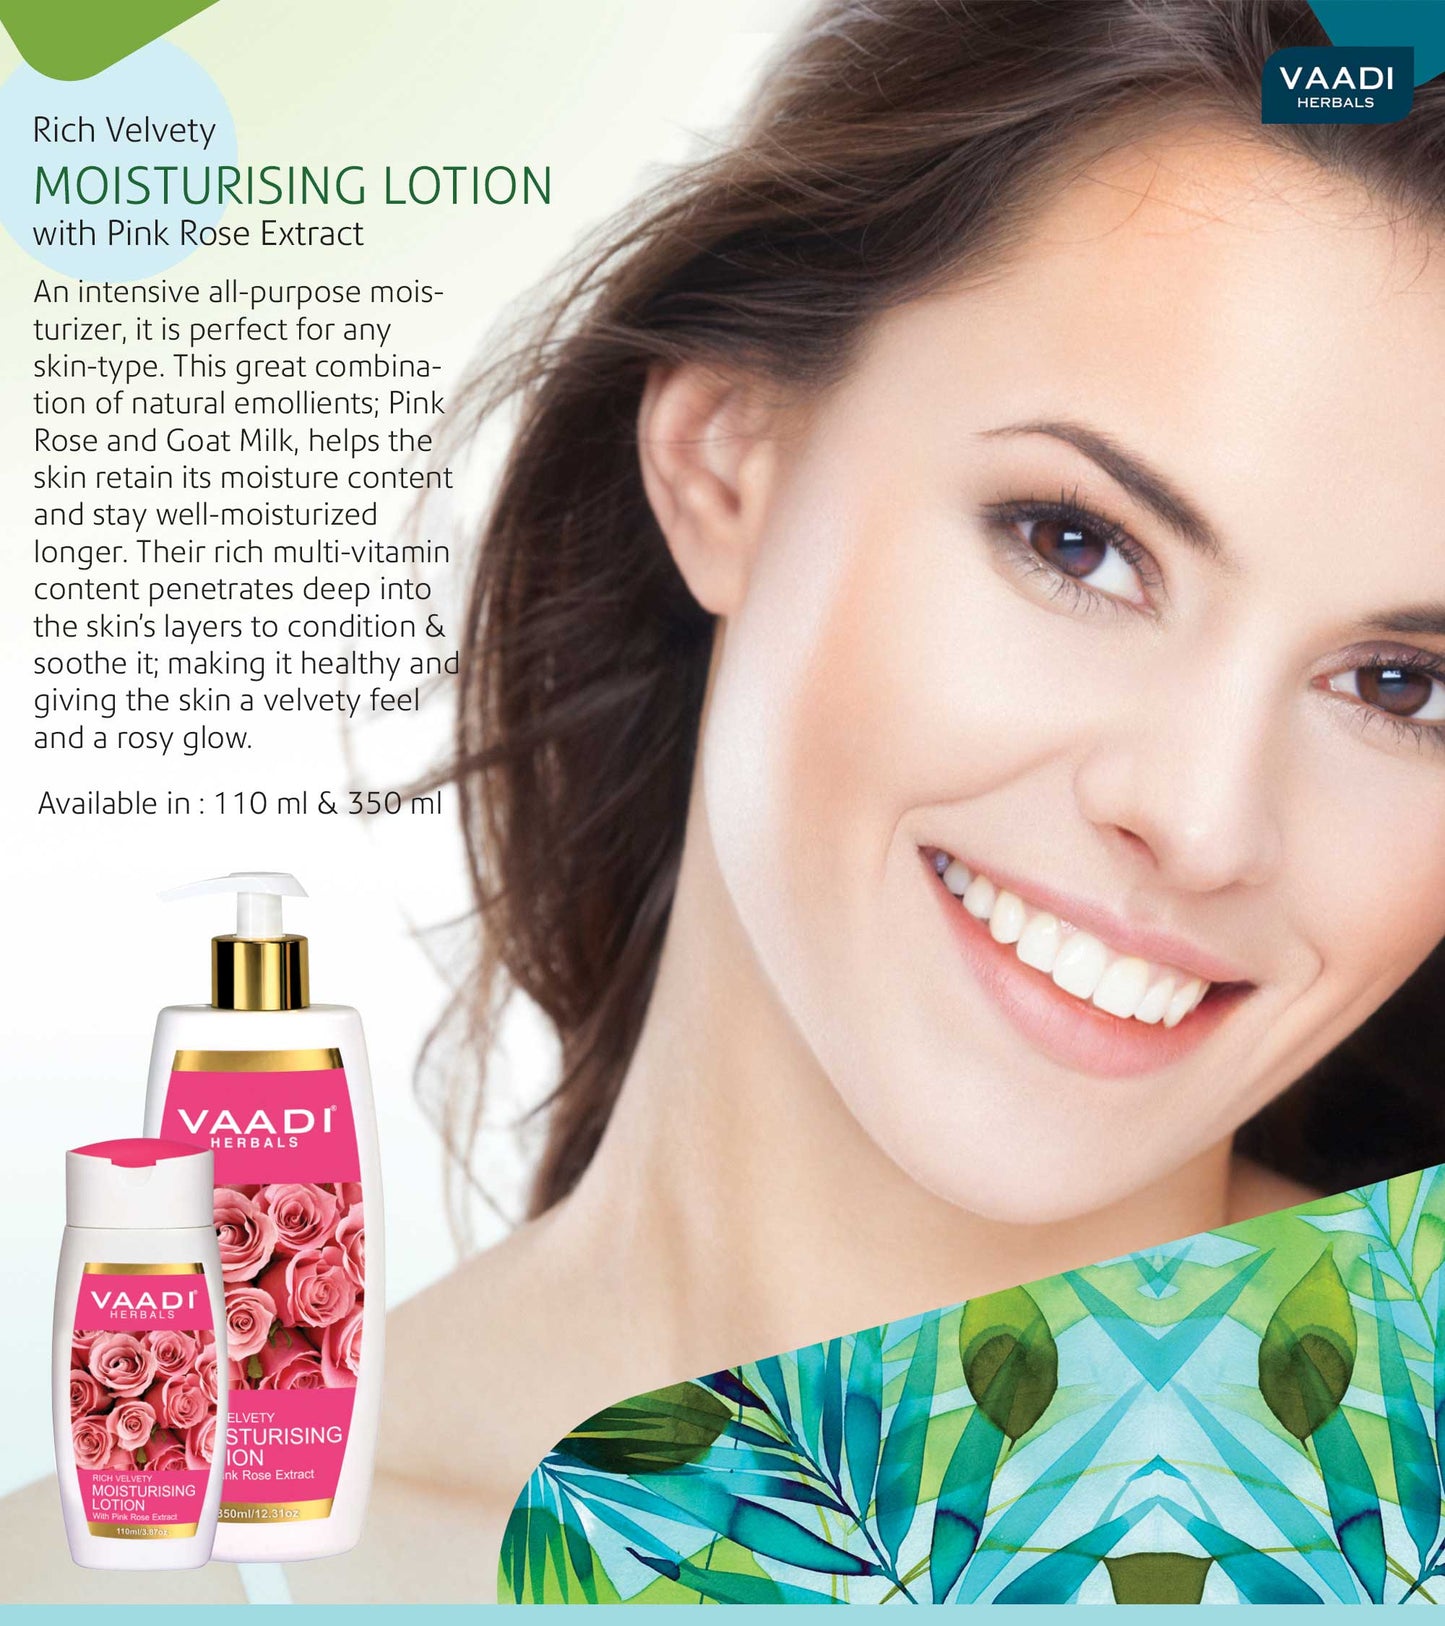 Organic Rich Velvety Moisturising Lotion with Pink Rose Extract - Retains Moisture in Skin - Makes Skin Velvety Soft (110 ml / 4 fl oz)